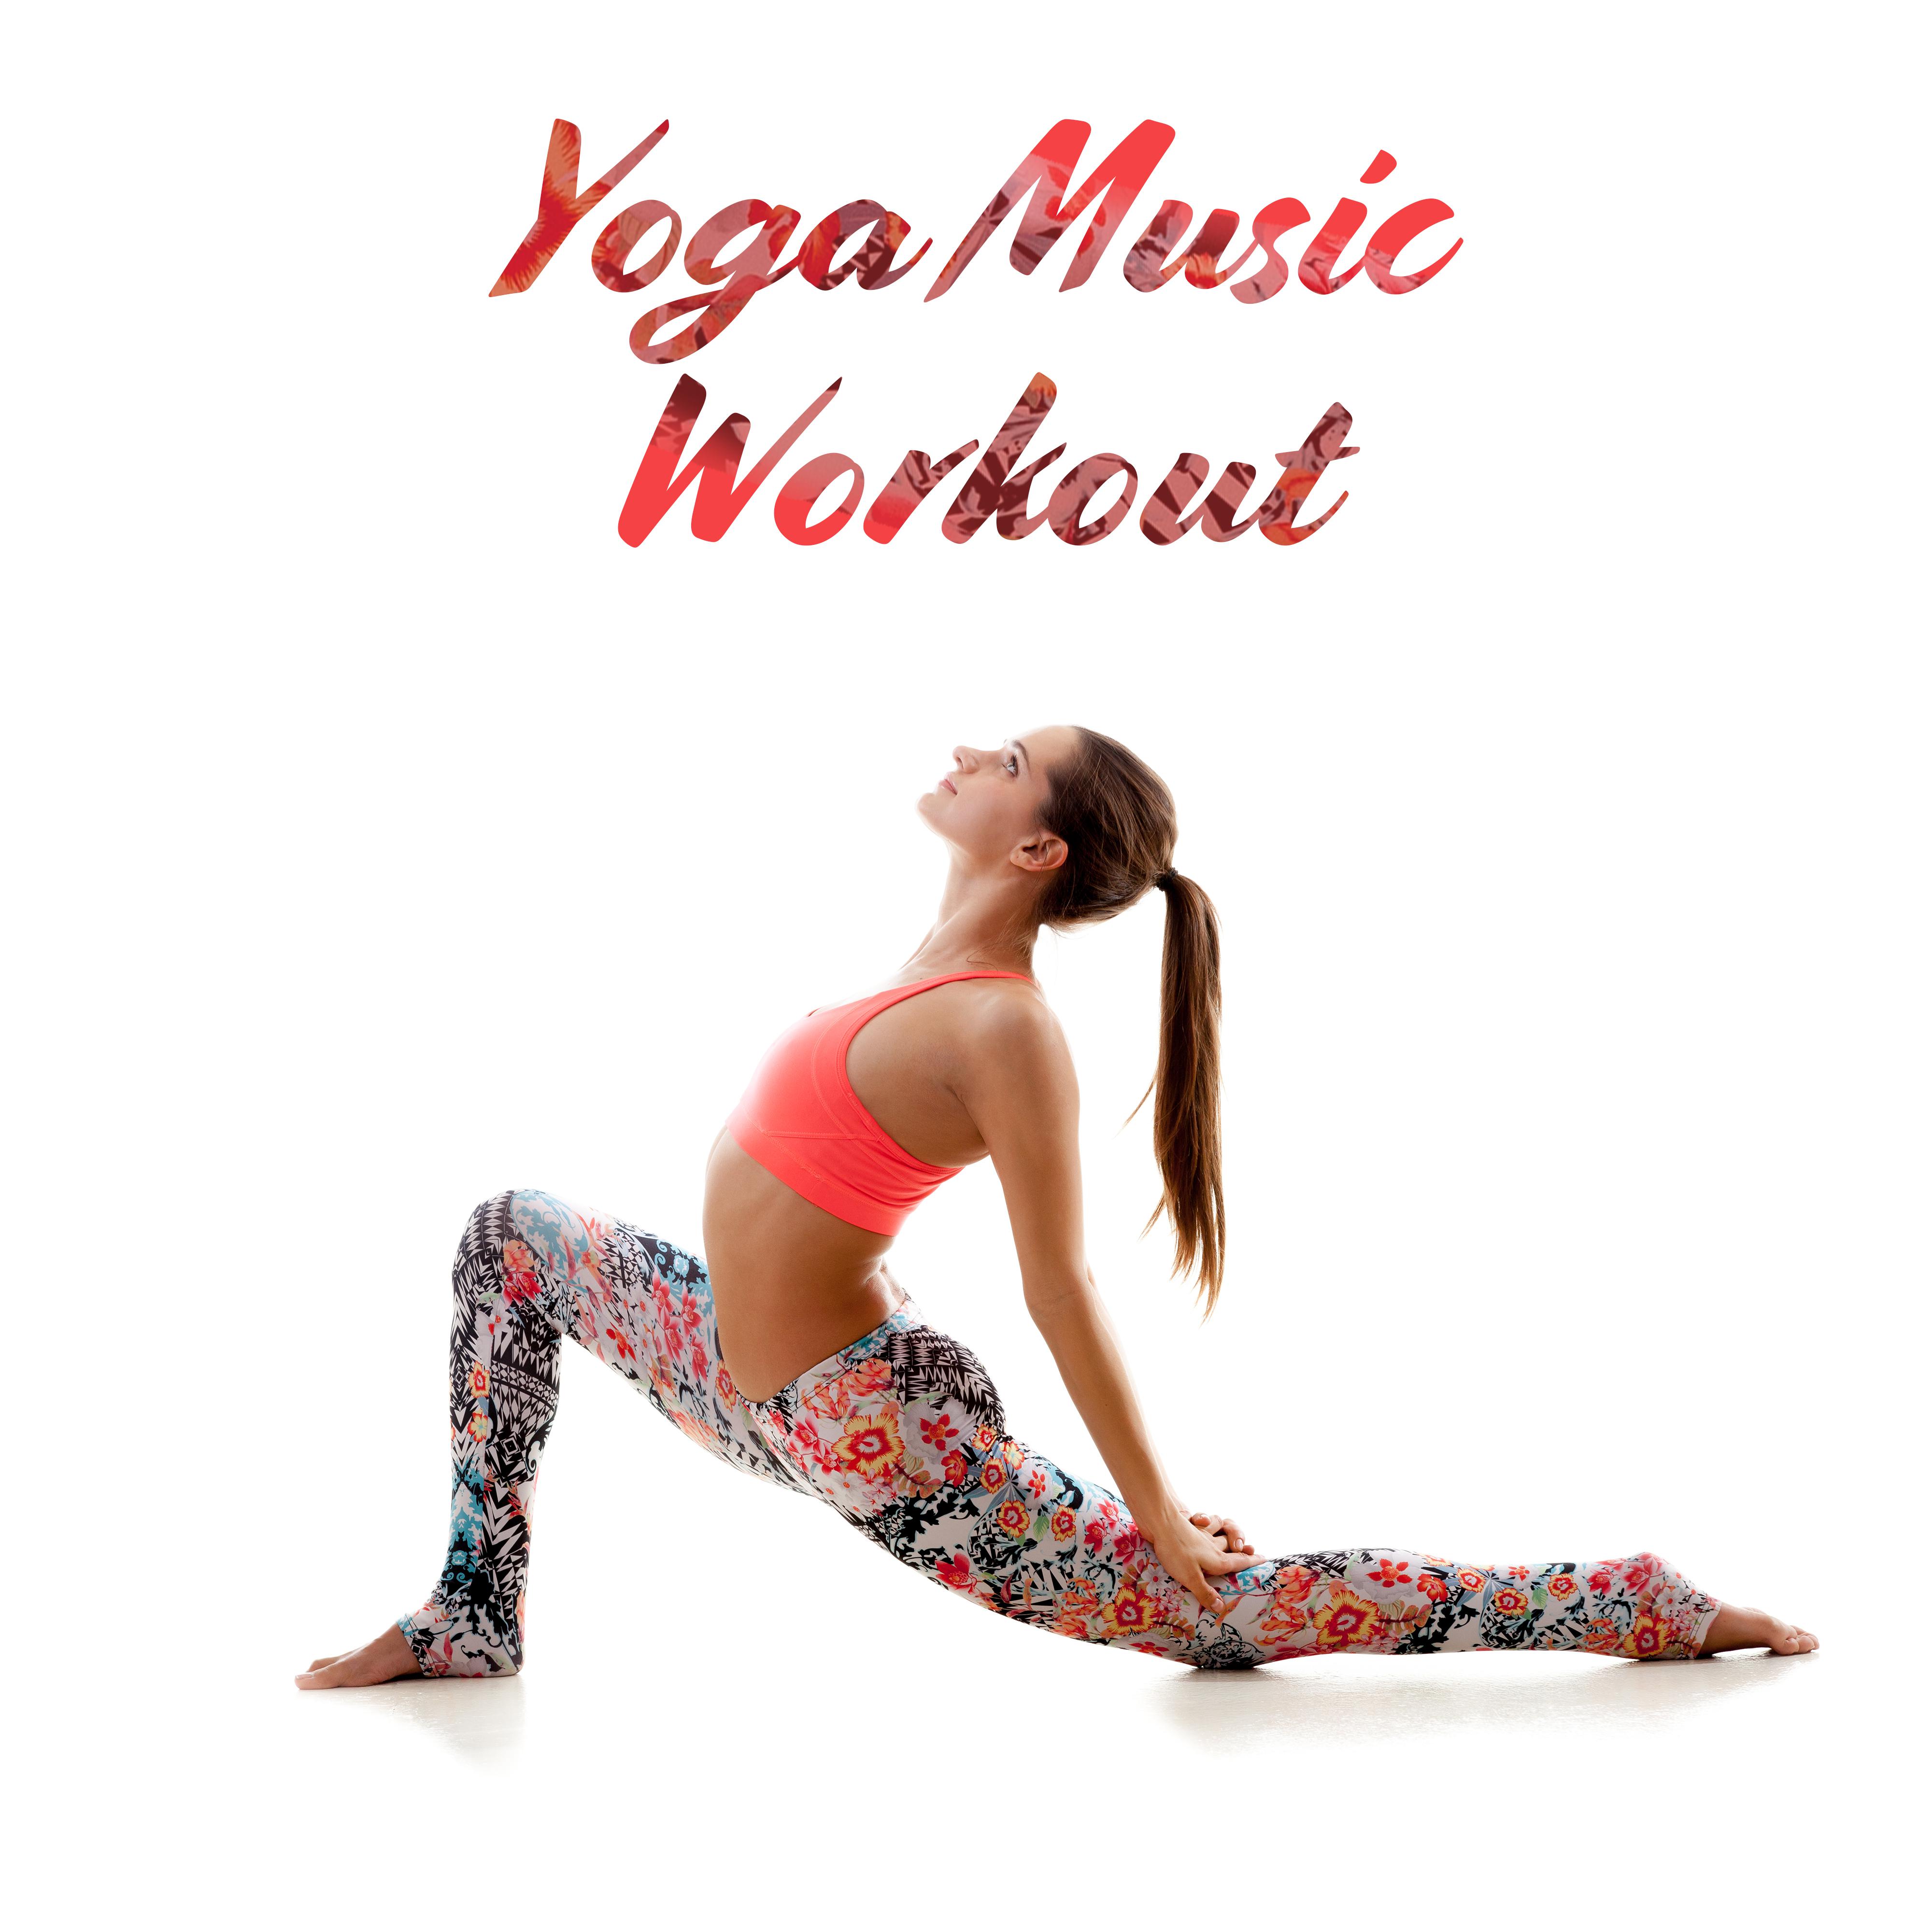 Yoga Music Workout – Yoga Training, Deep Relaxation, Pure Zen, Meditation Music to Calm Down